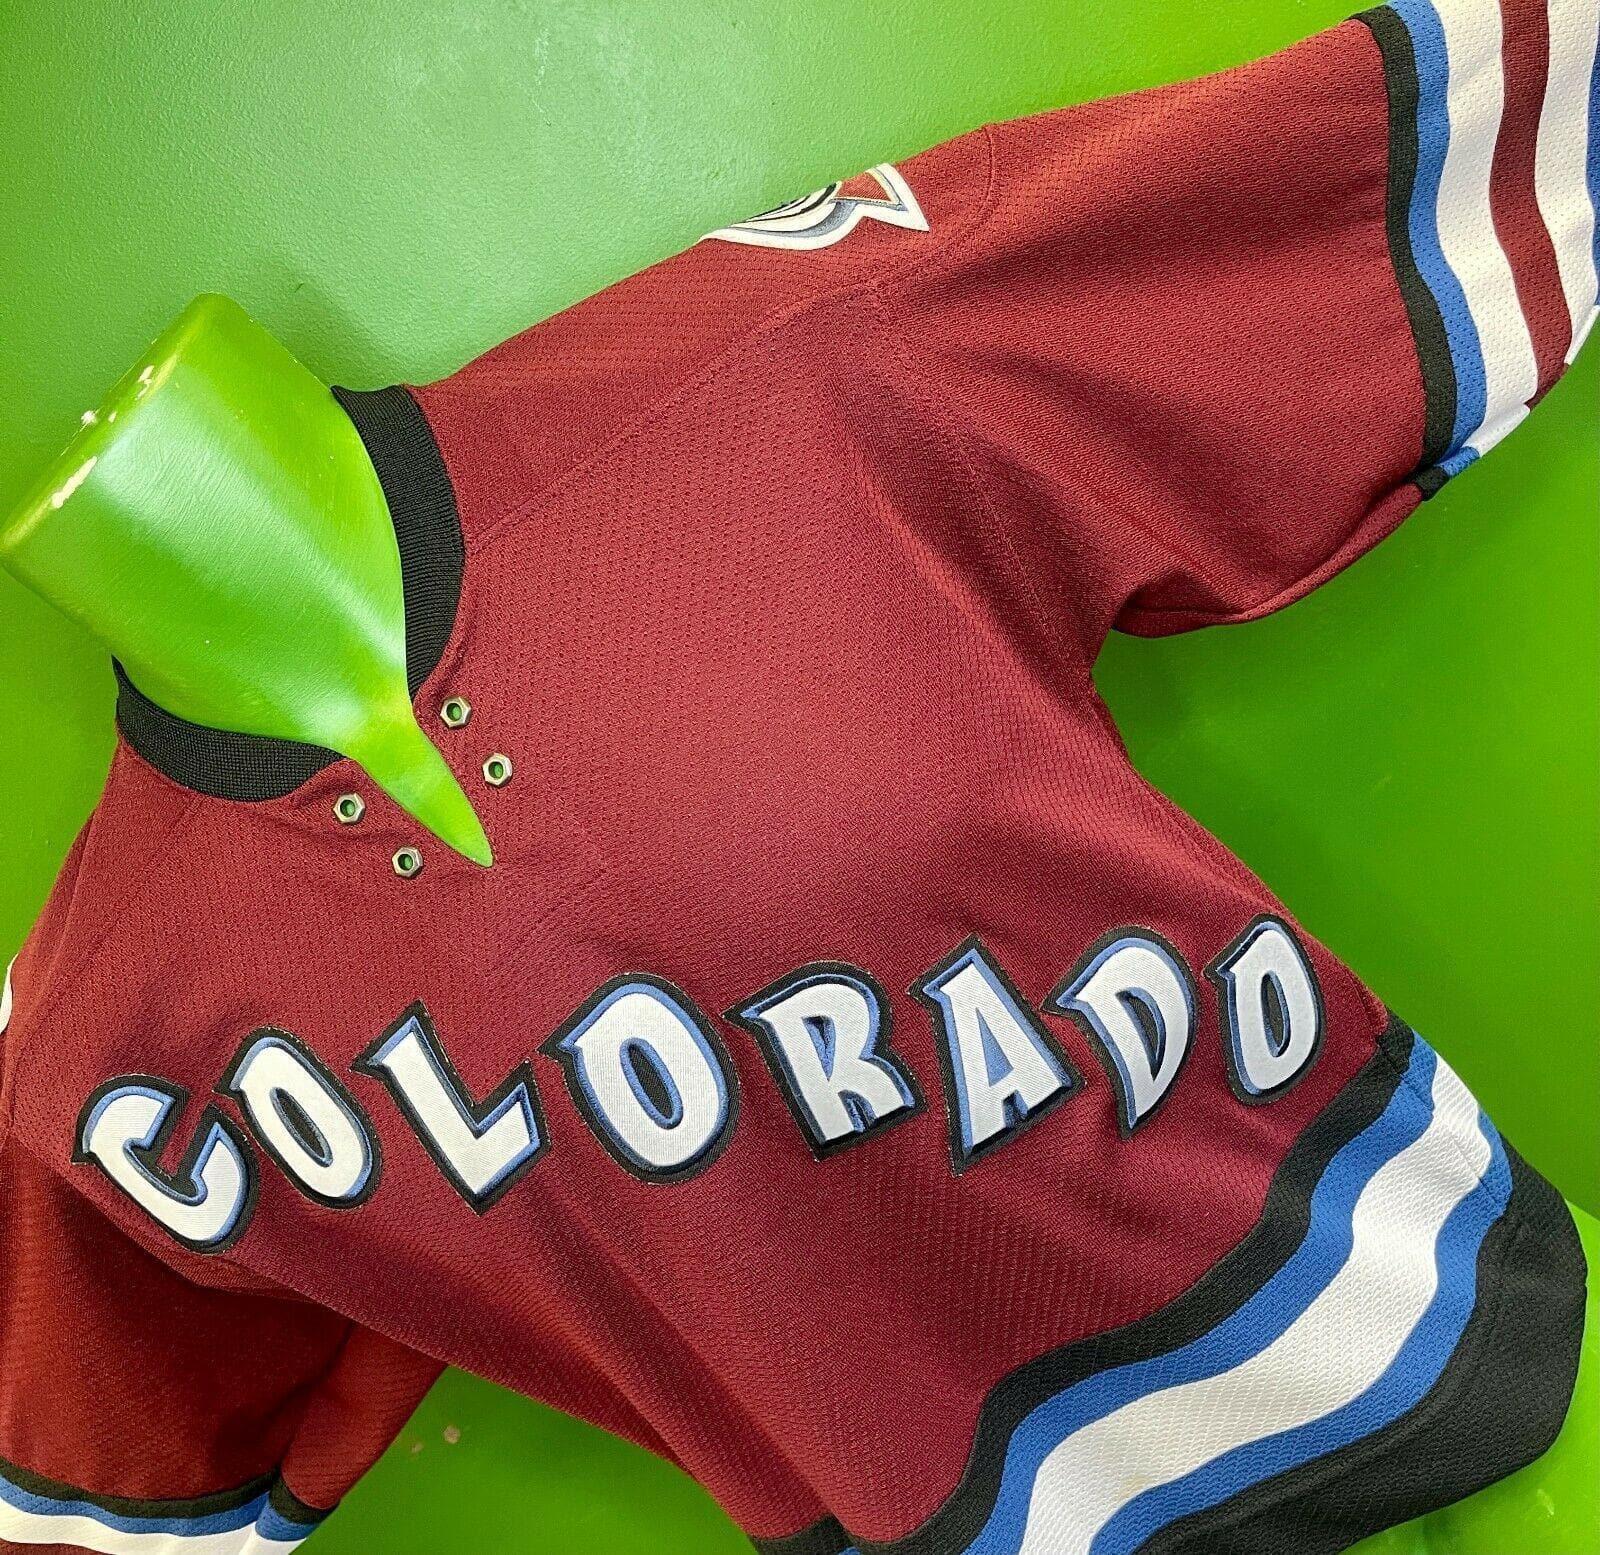 NHL Colorado Avalanche Koho Ice Hockey Jersey Stitched Youth sml-med 6-10